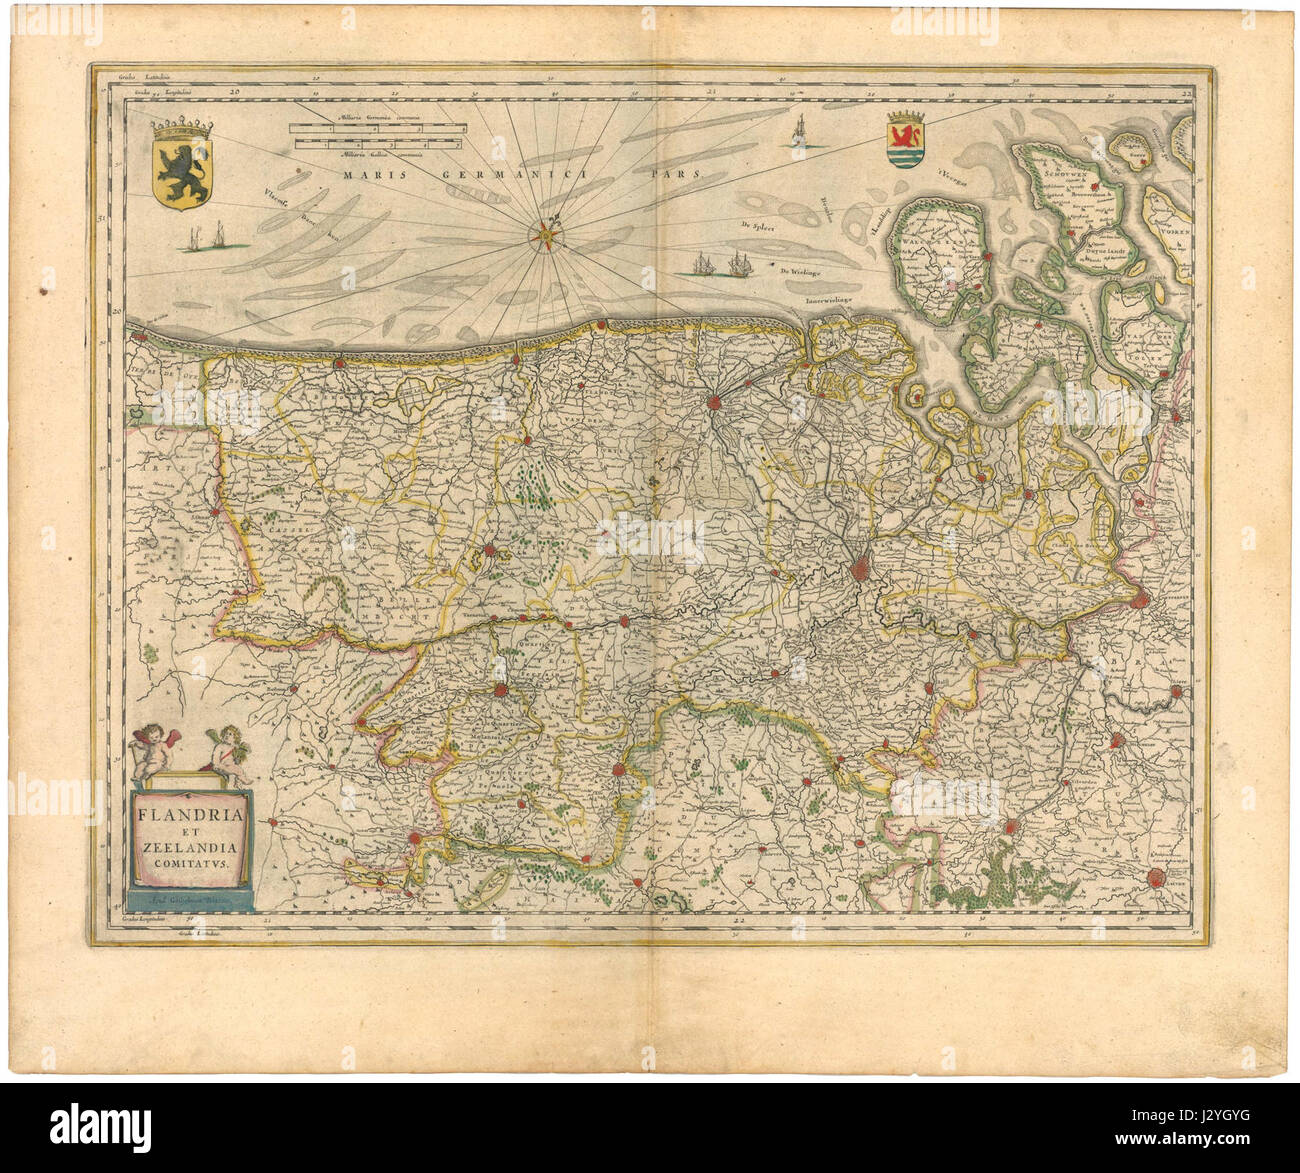 Blaeu 1645 - Flandria et Zeelandia Comitatus Foto de stock